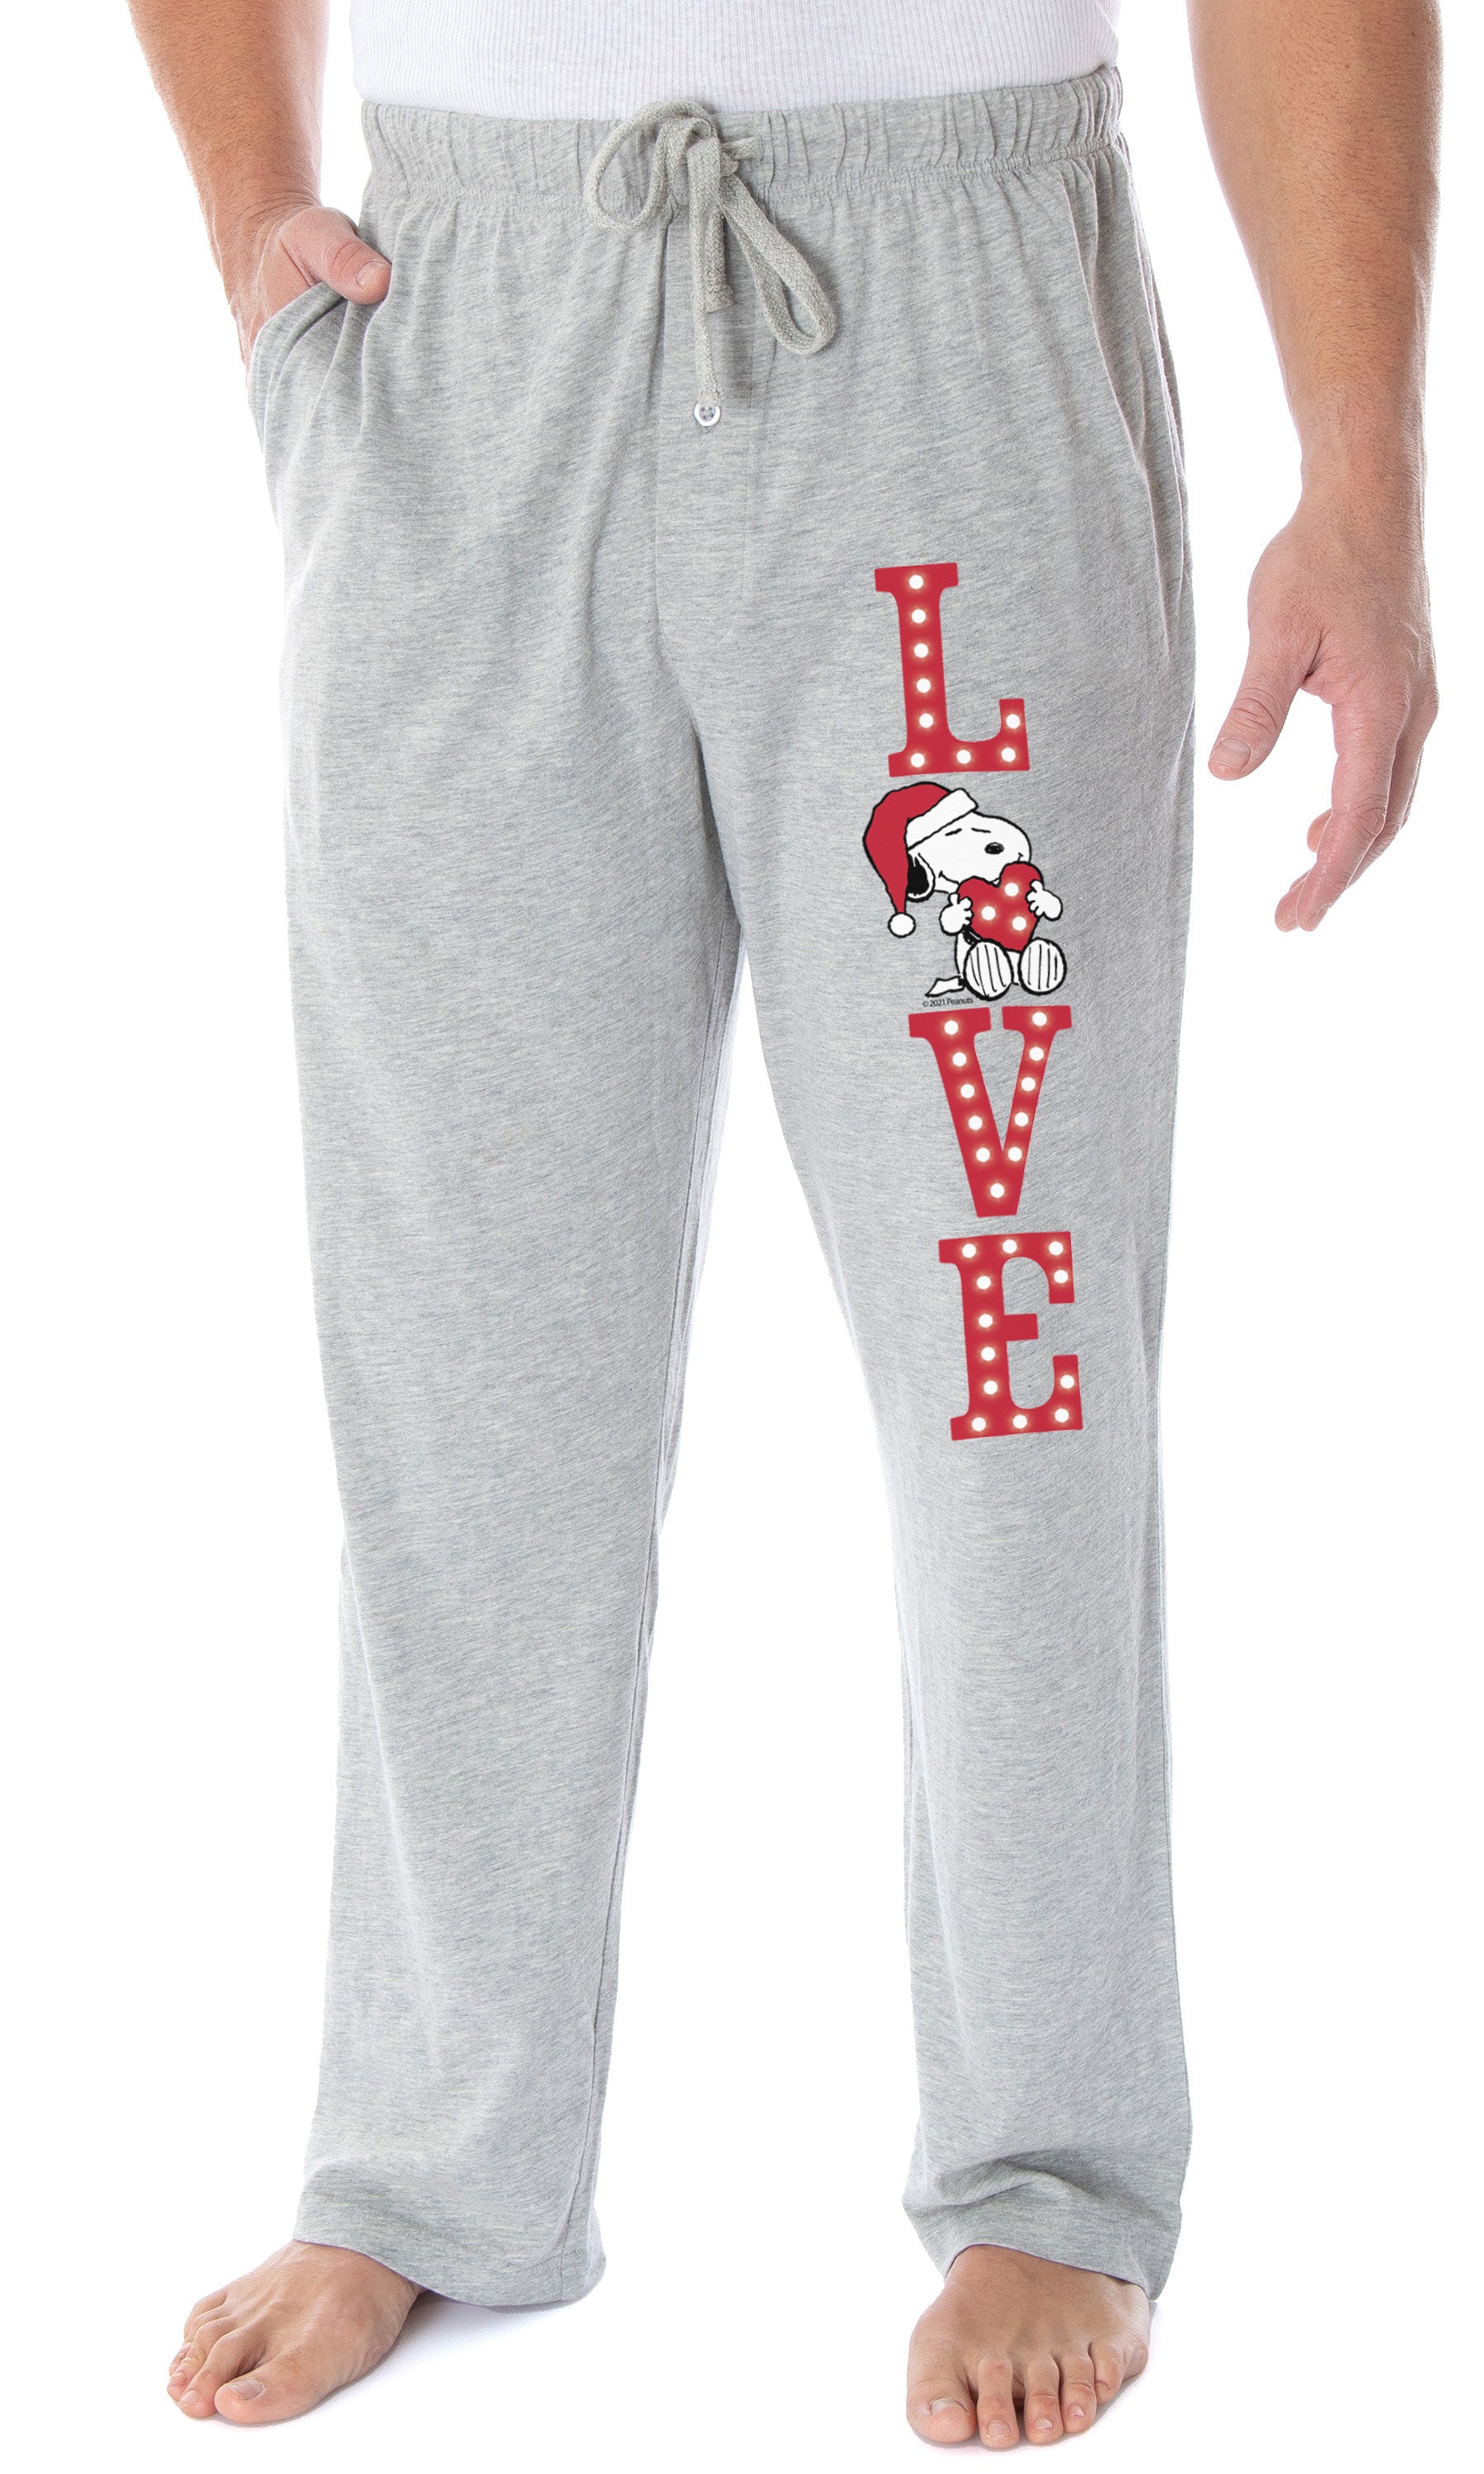 Peanuts Snoopy Men's Pajama Pants LOVE Loungewear Sleep Bottoms